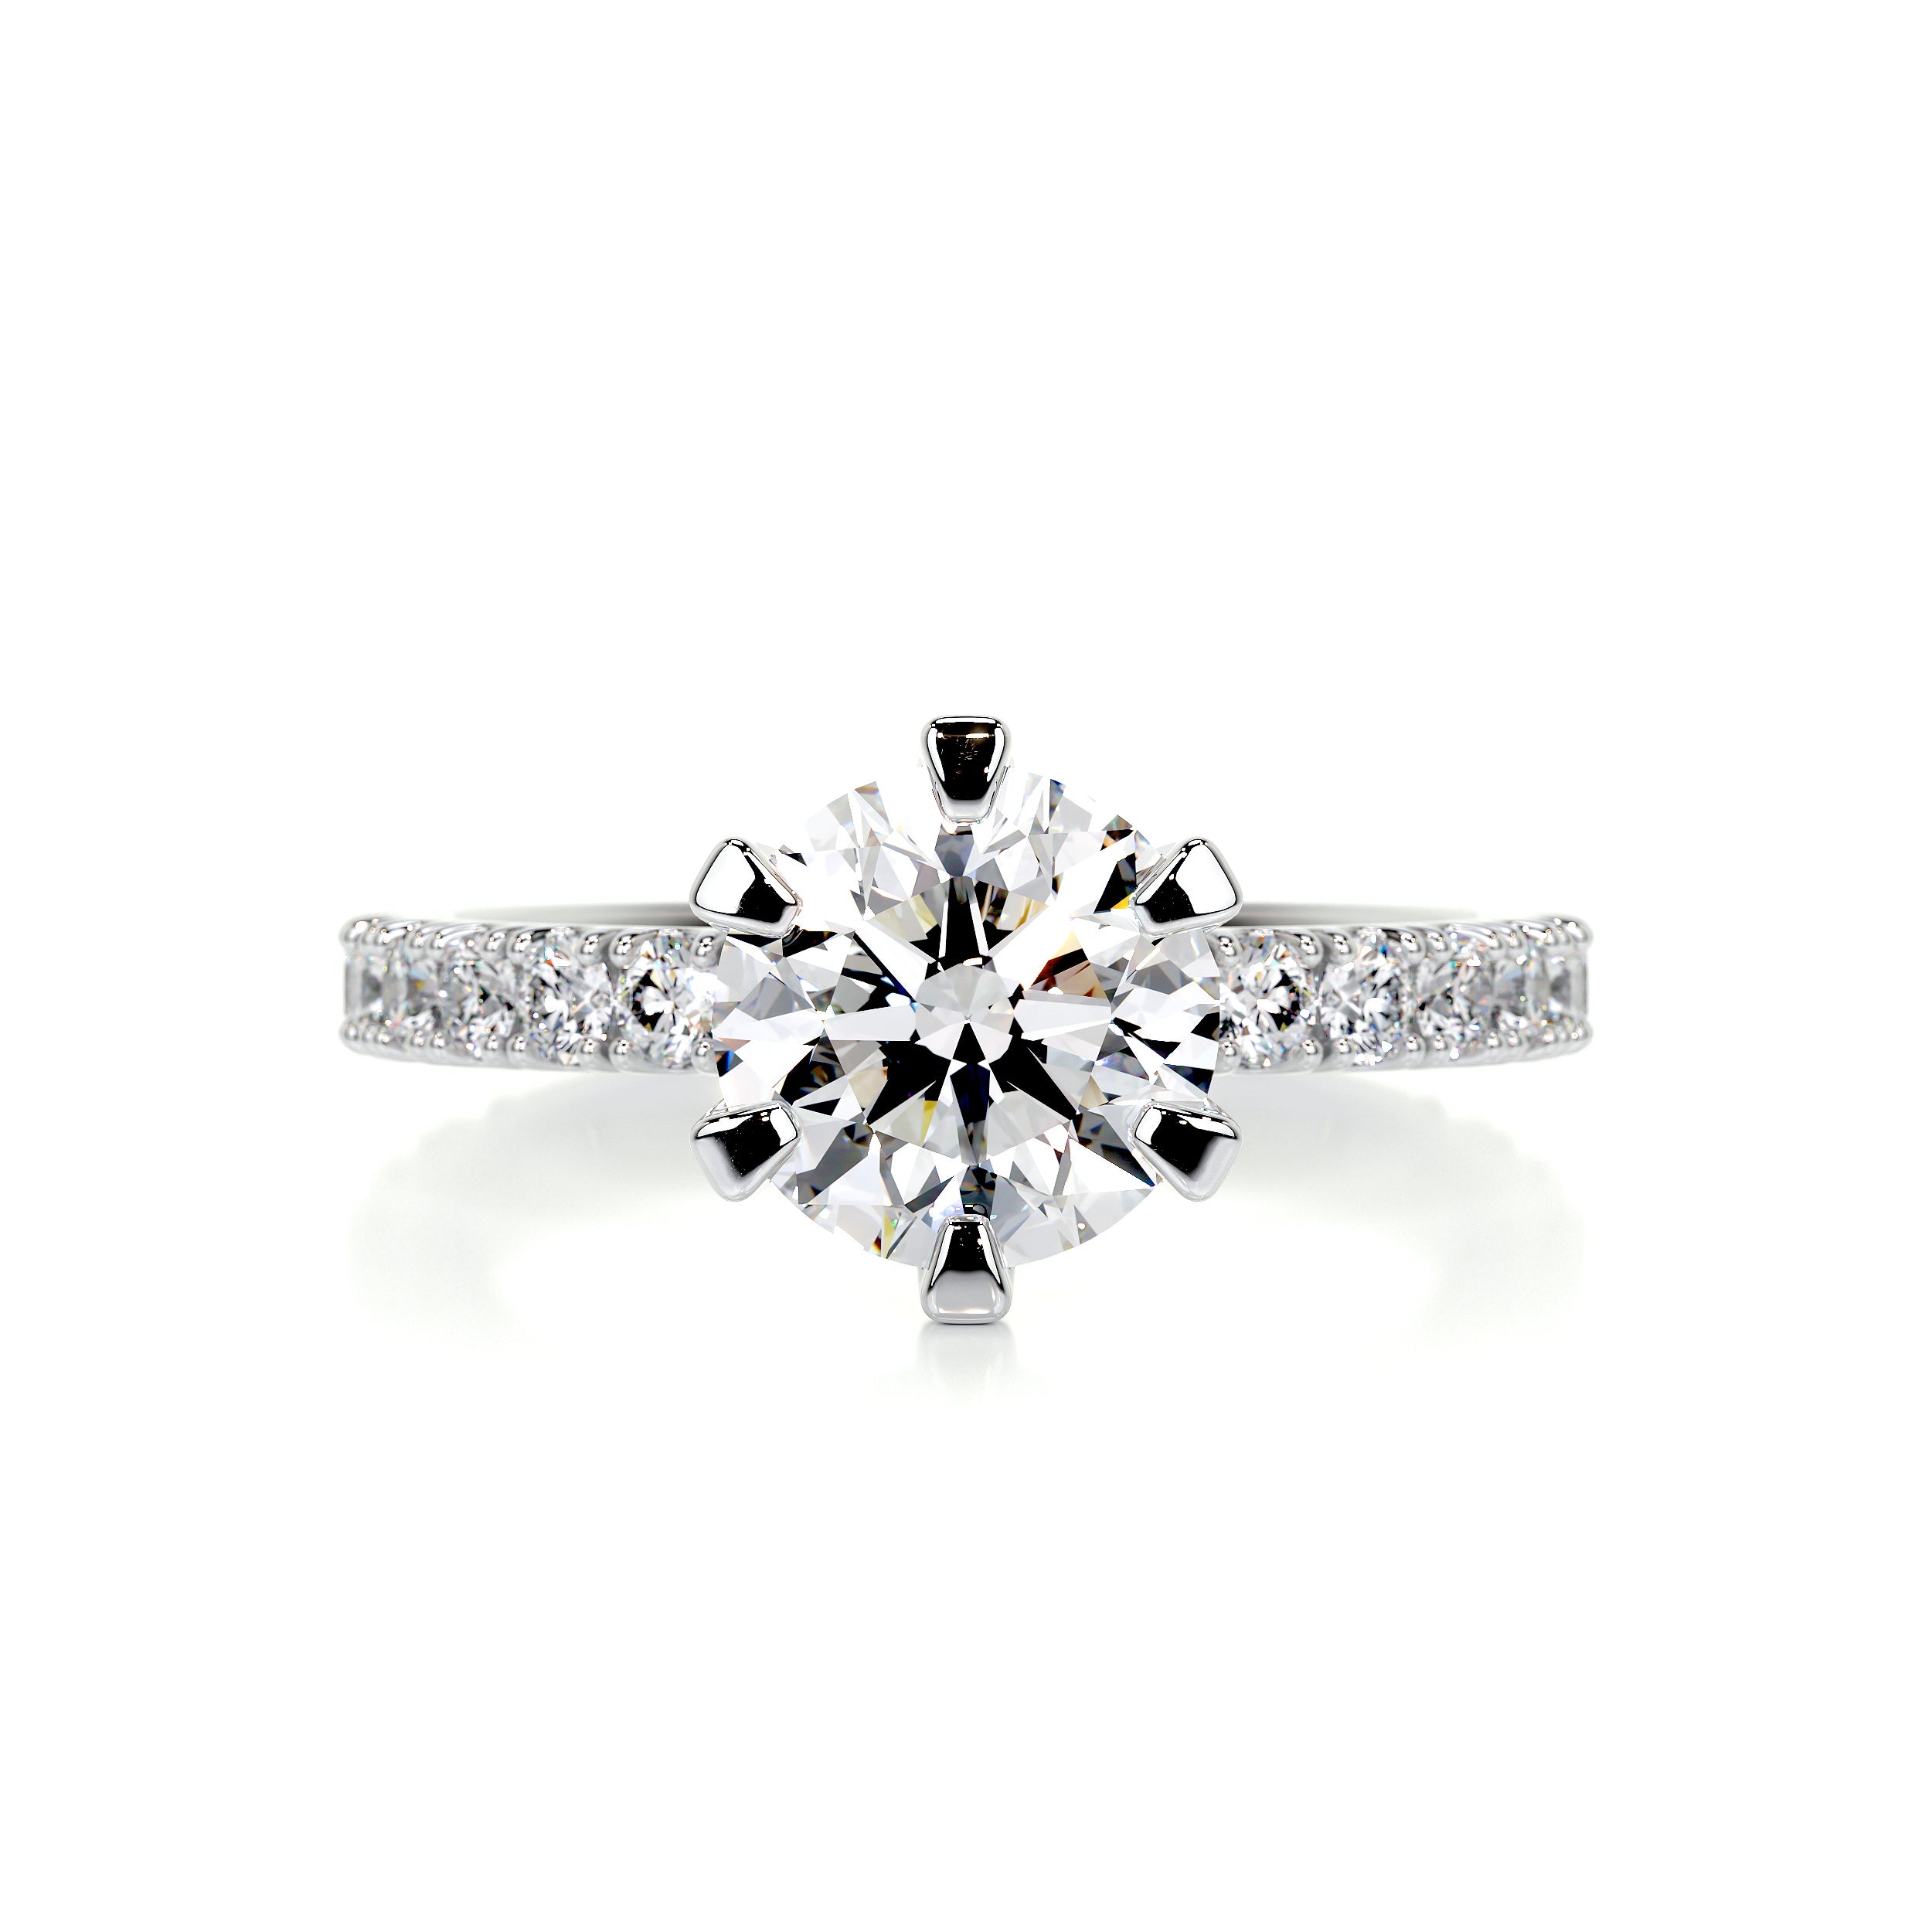 Veronica Diamond Engagement Ring   (2 Carat) -14K White Gold